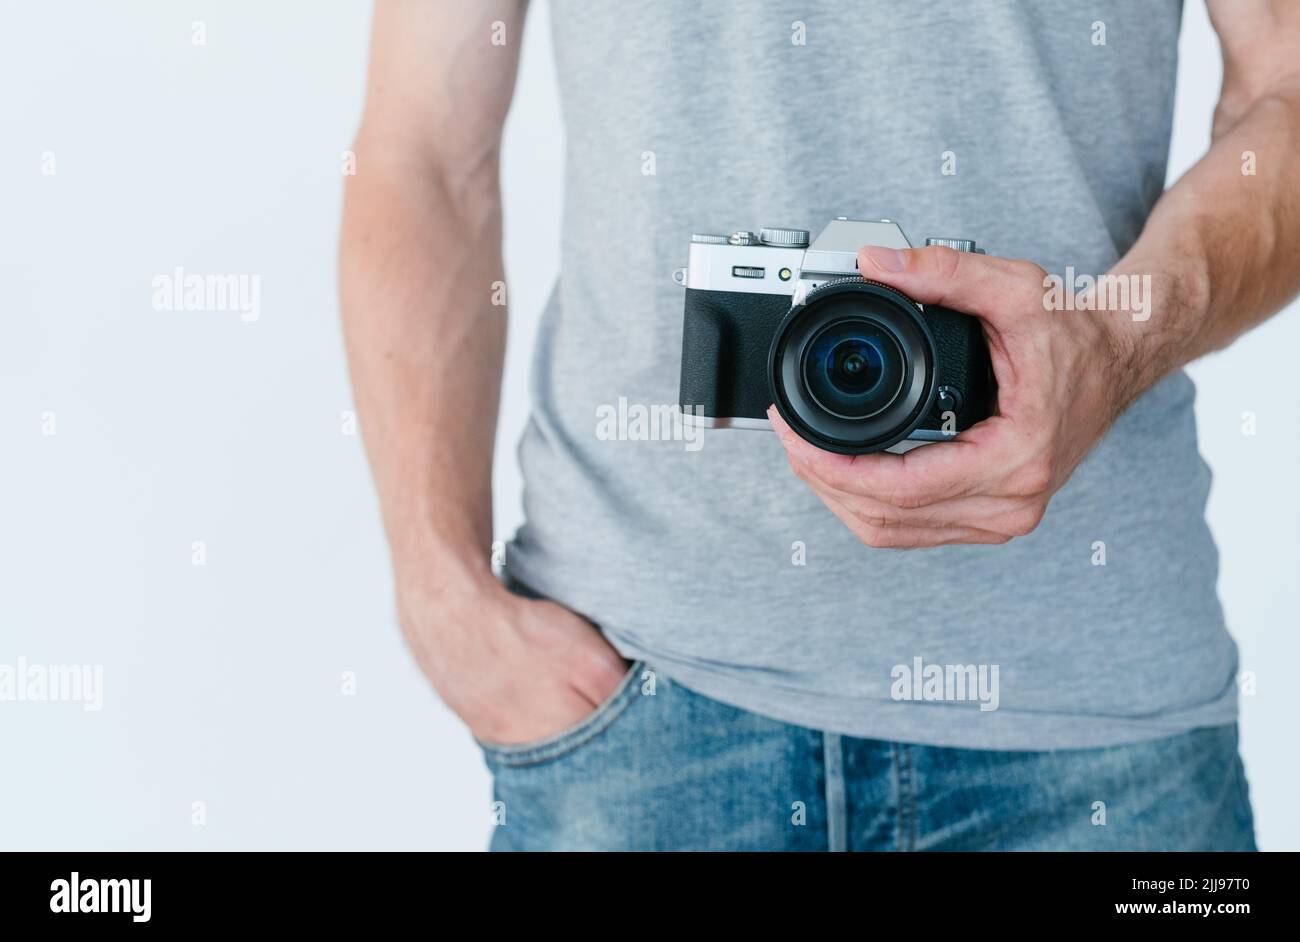 photography equipment electronics man hold camera Stock Photo